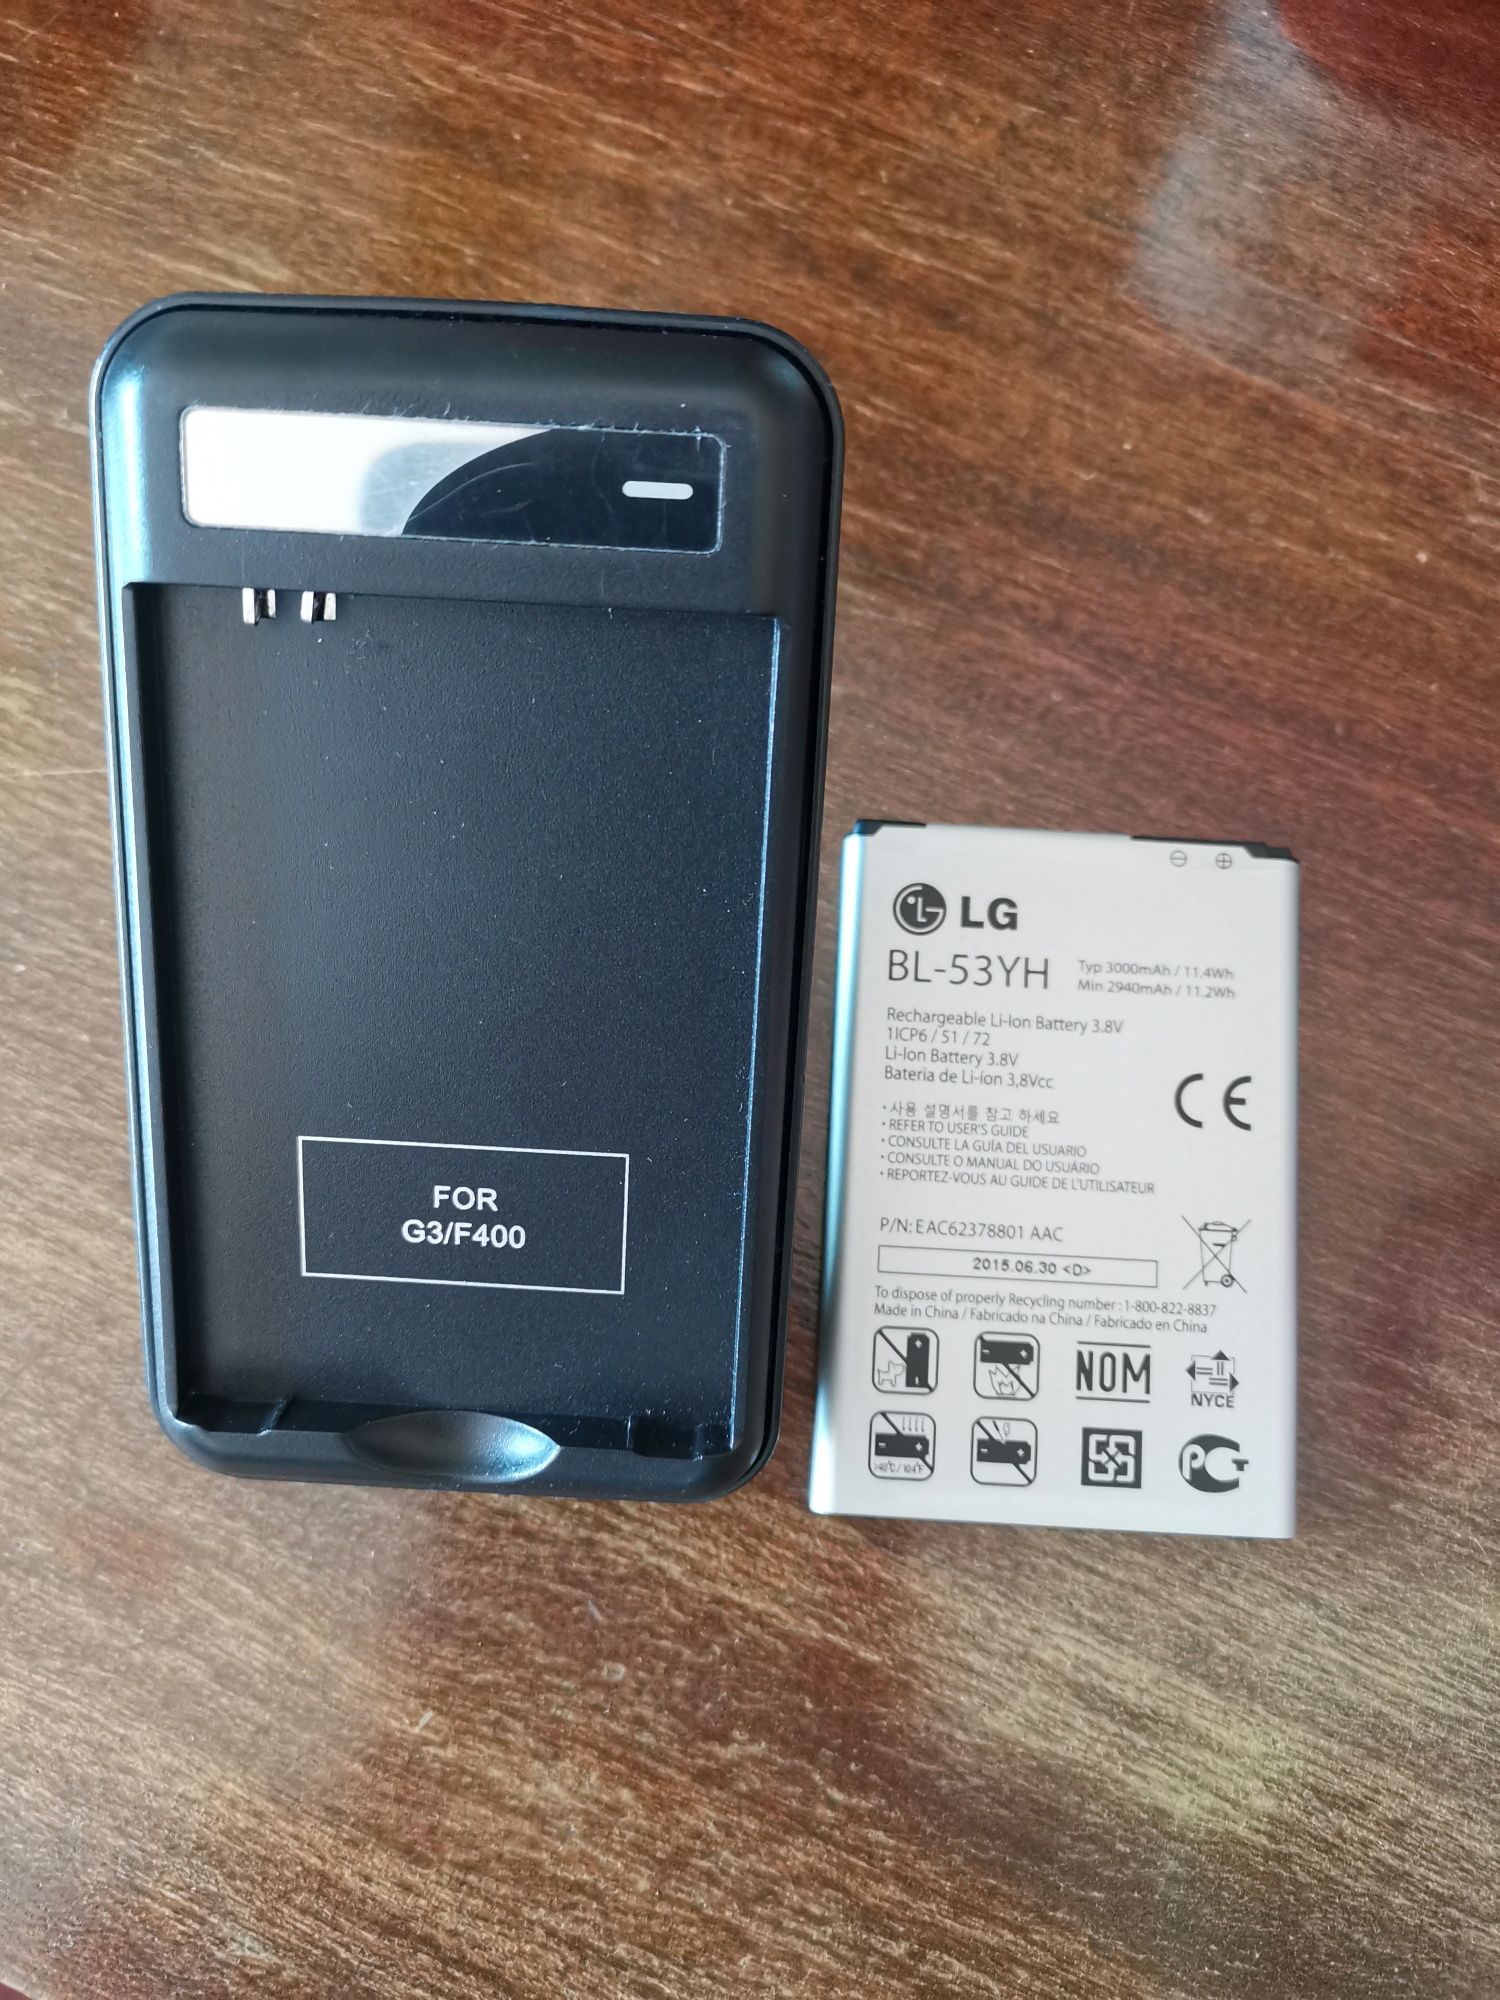 Bateria LG G3 nova